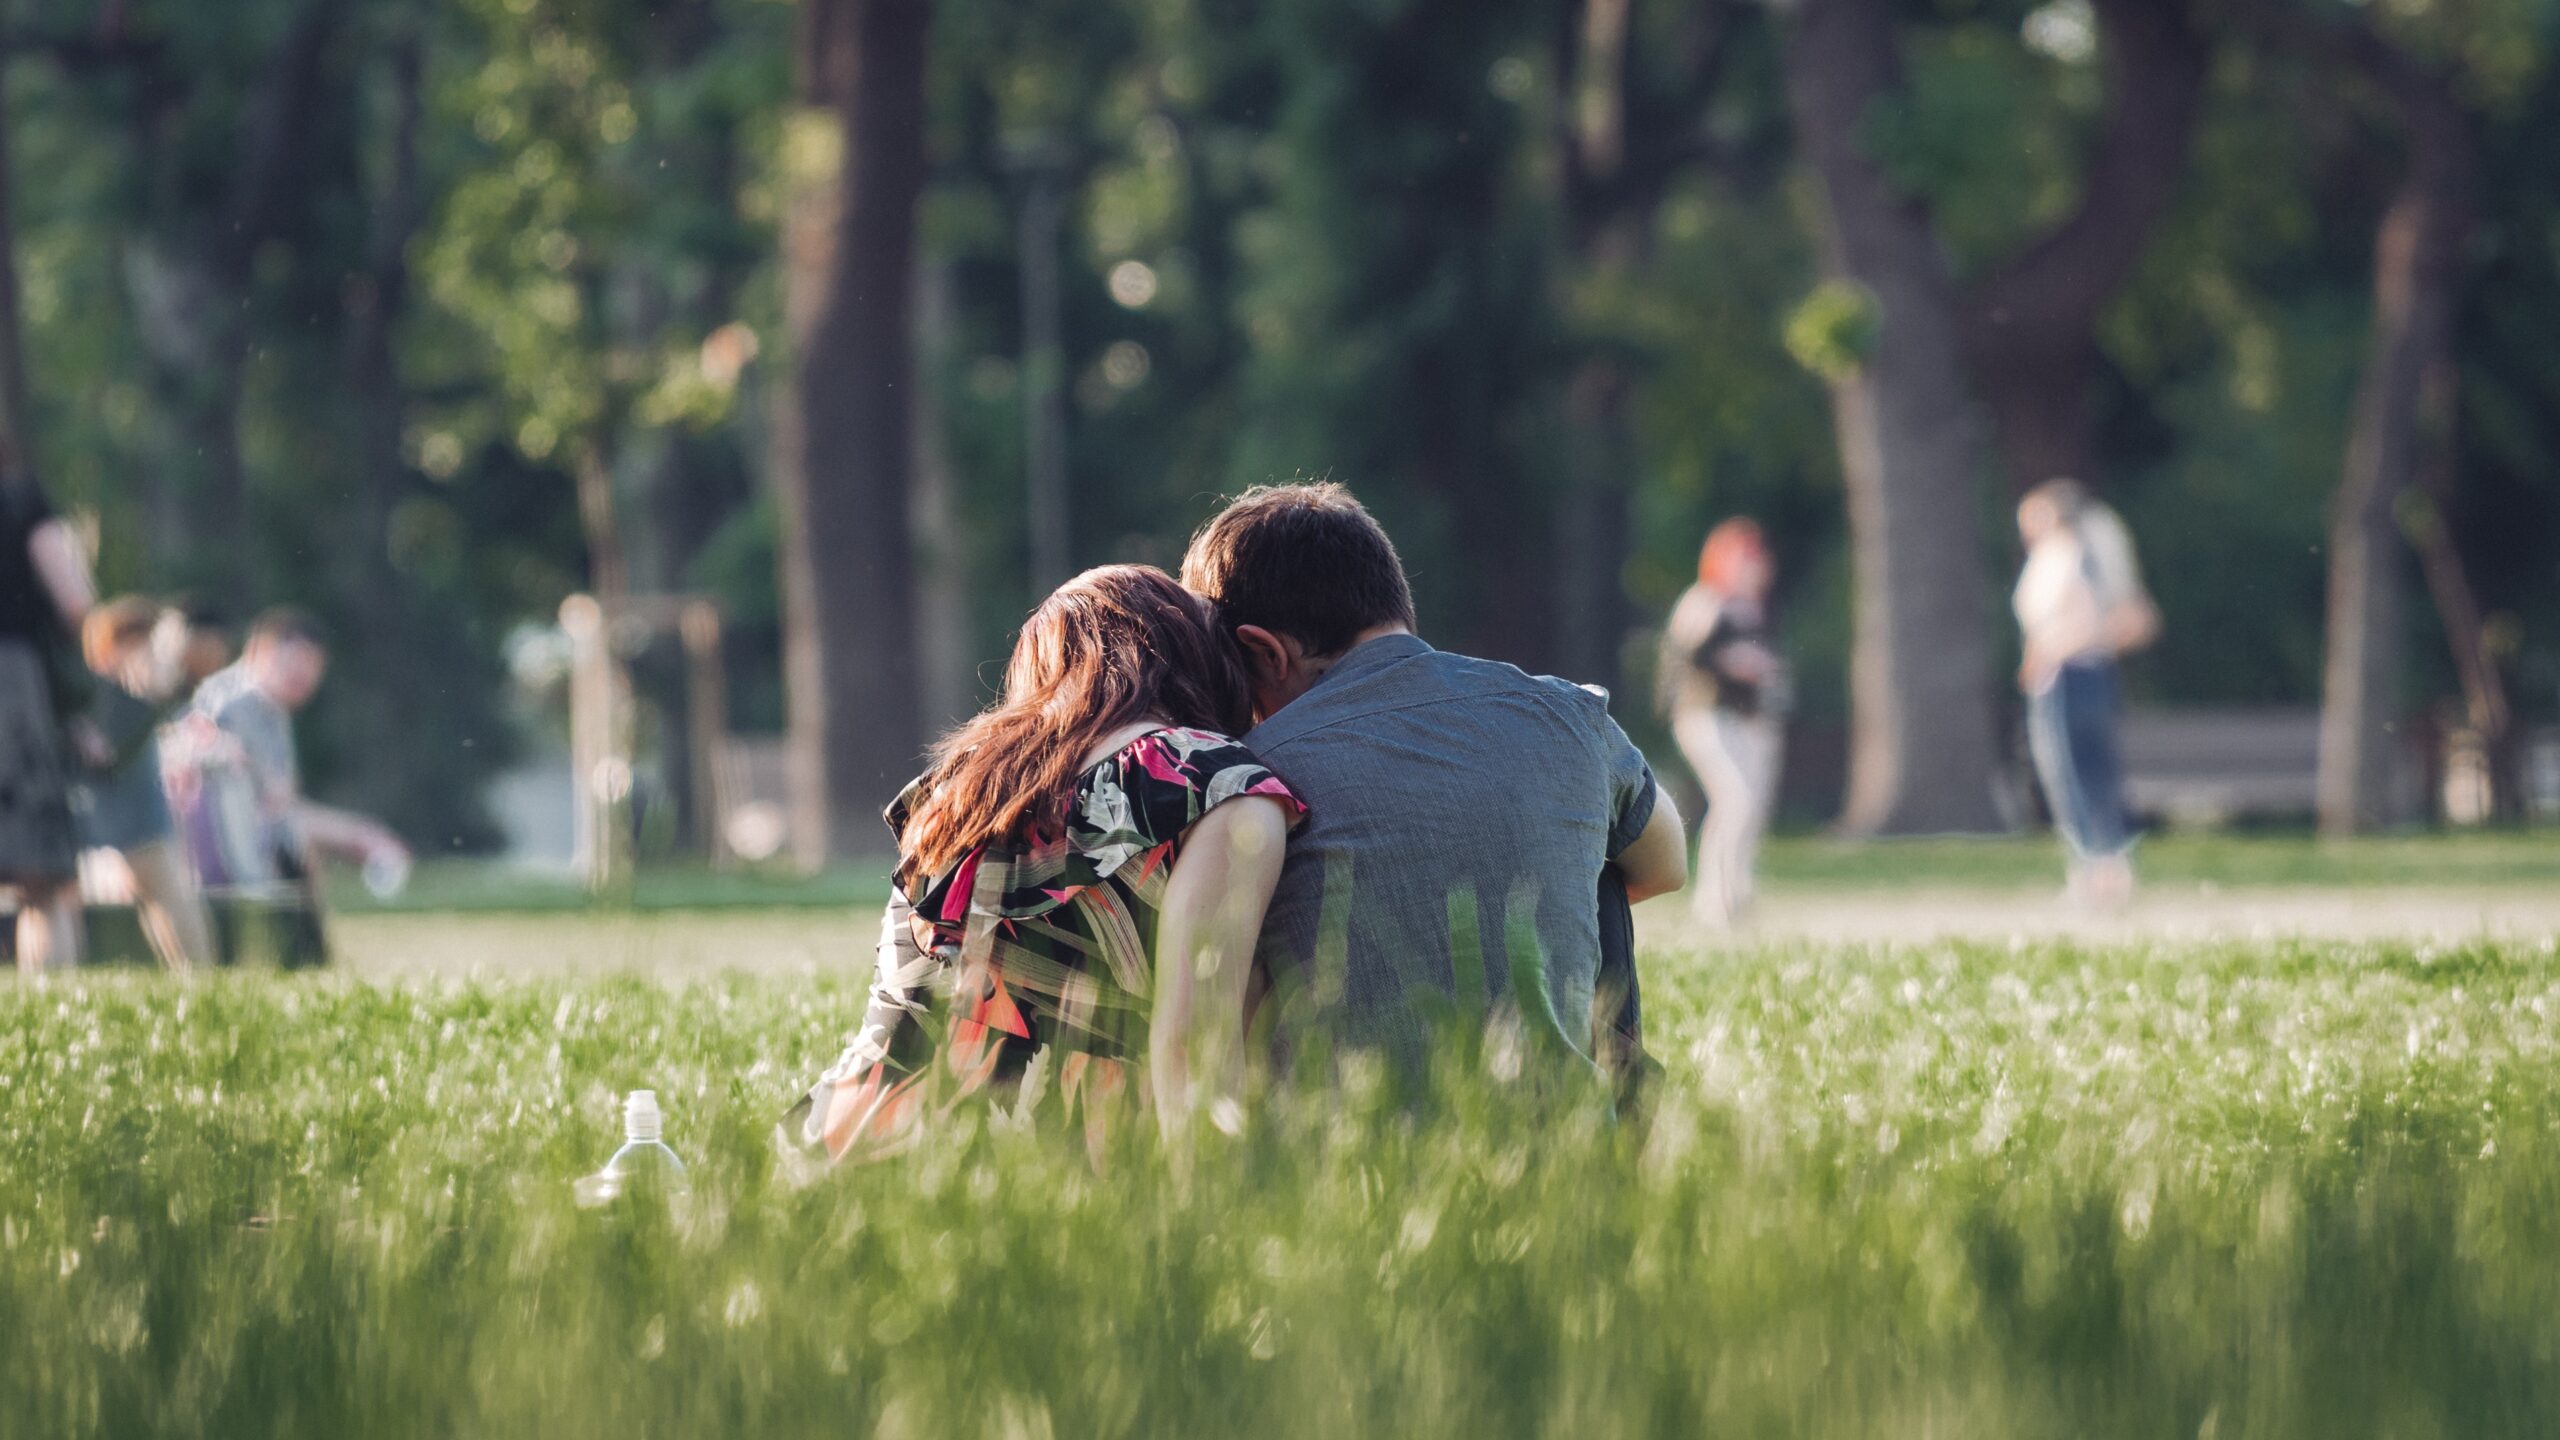 best parks in reseda california, couple sitting in grass park in reseda